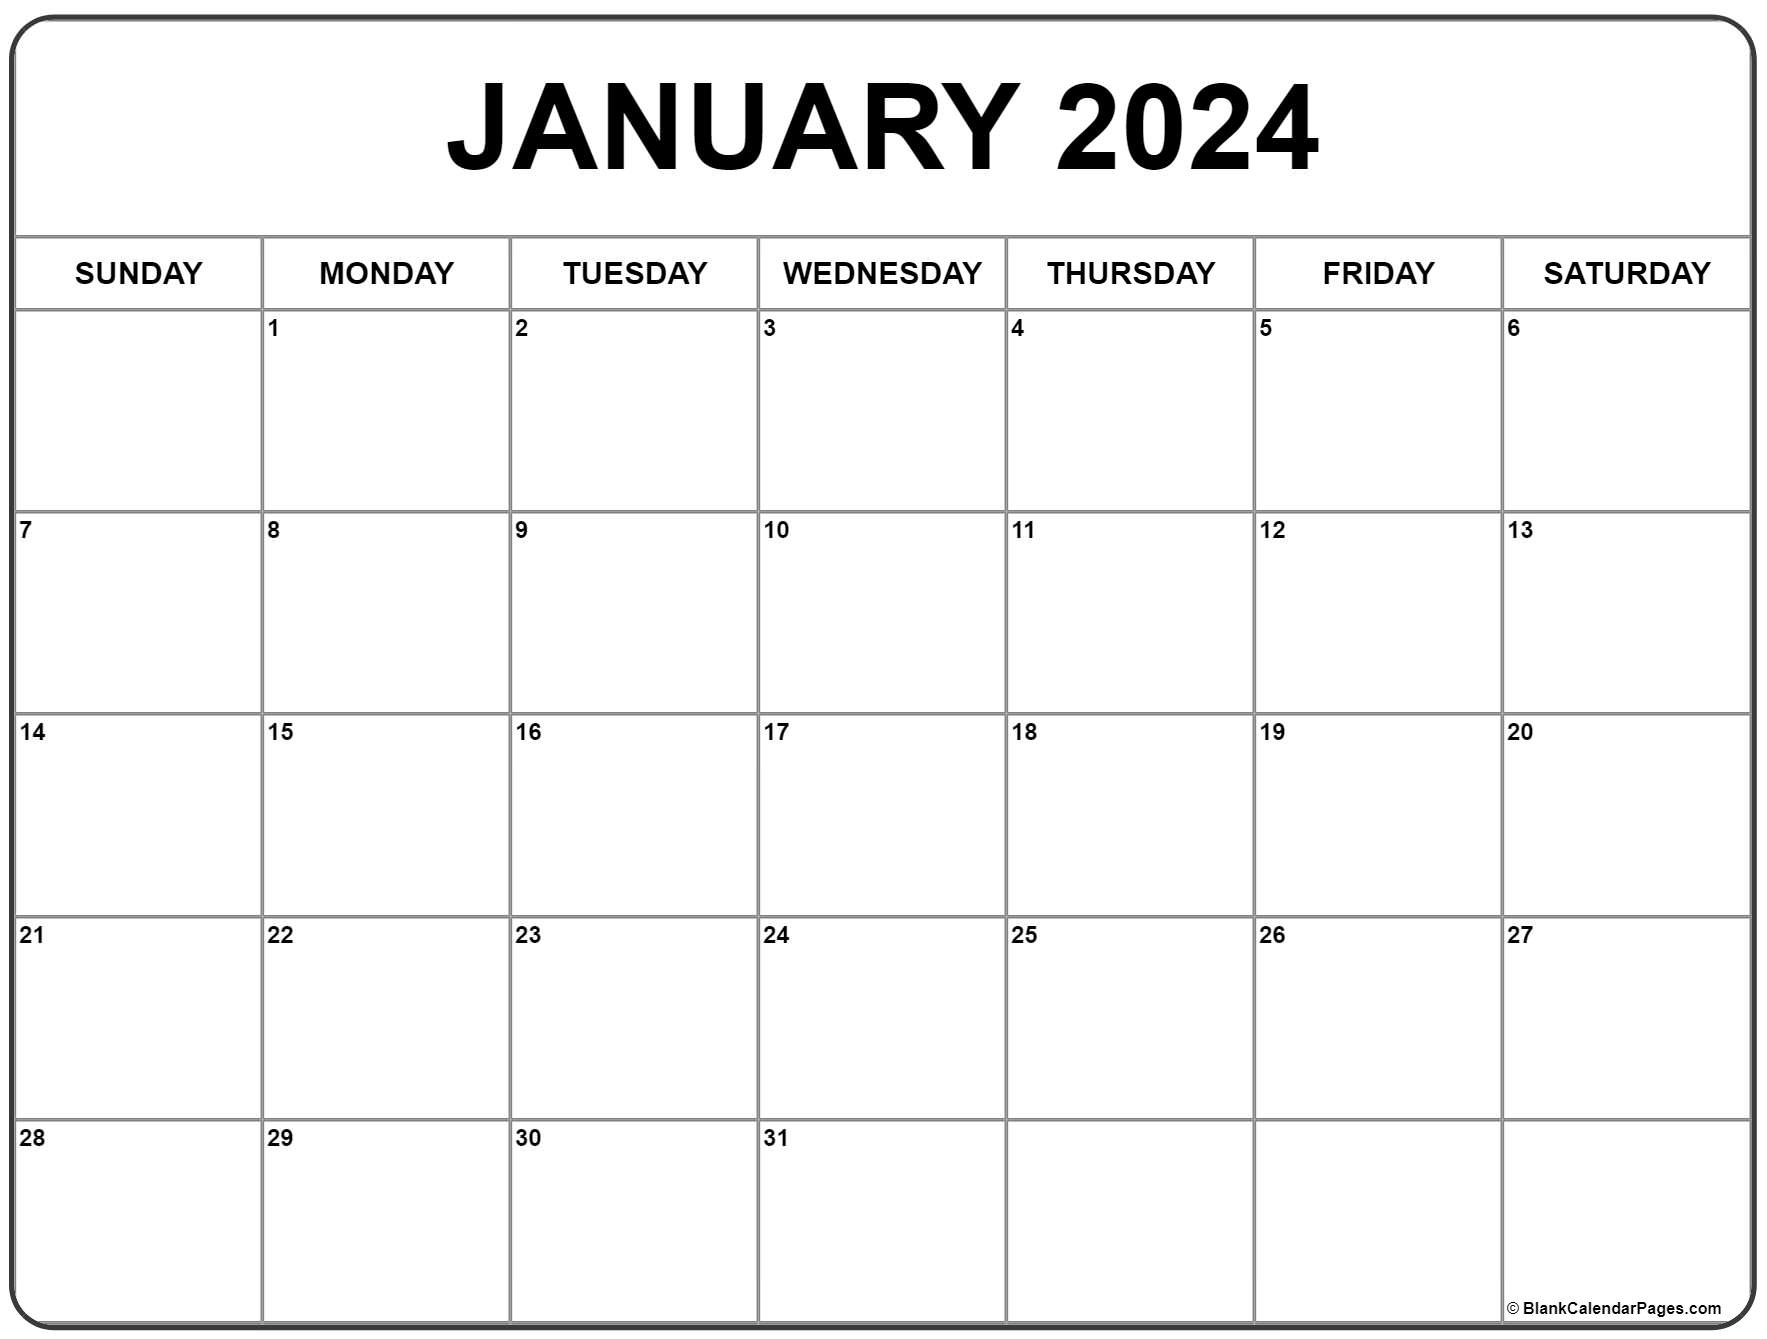 January 2024 Calendar | Free Printable Calendar for Printable Monthly Calendar For 2024